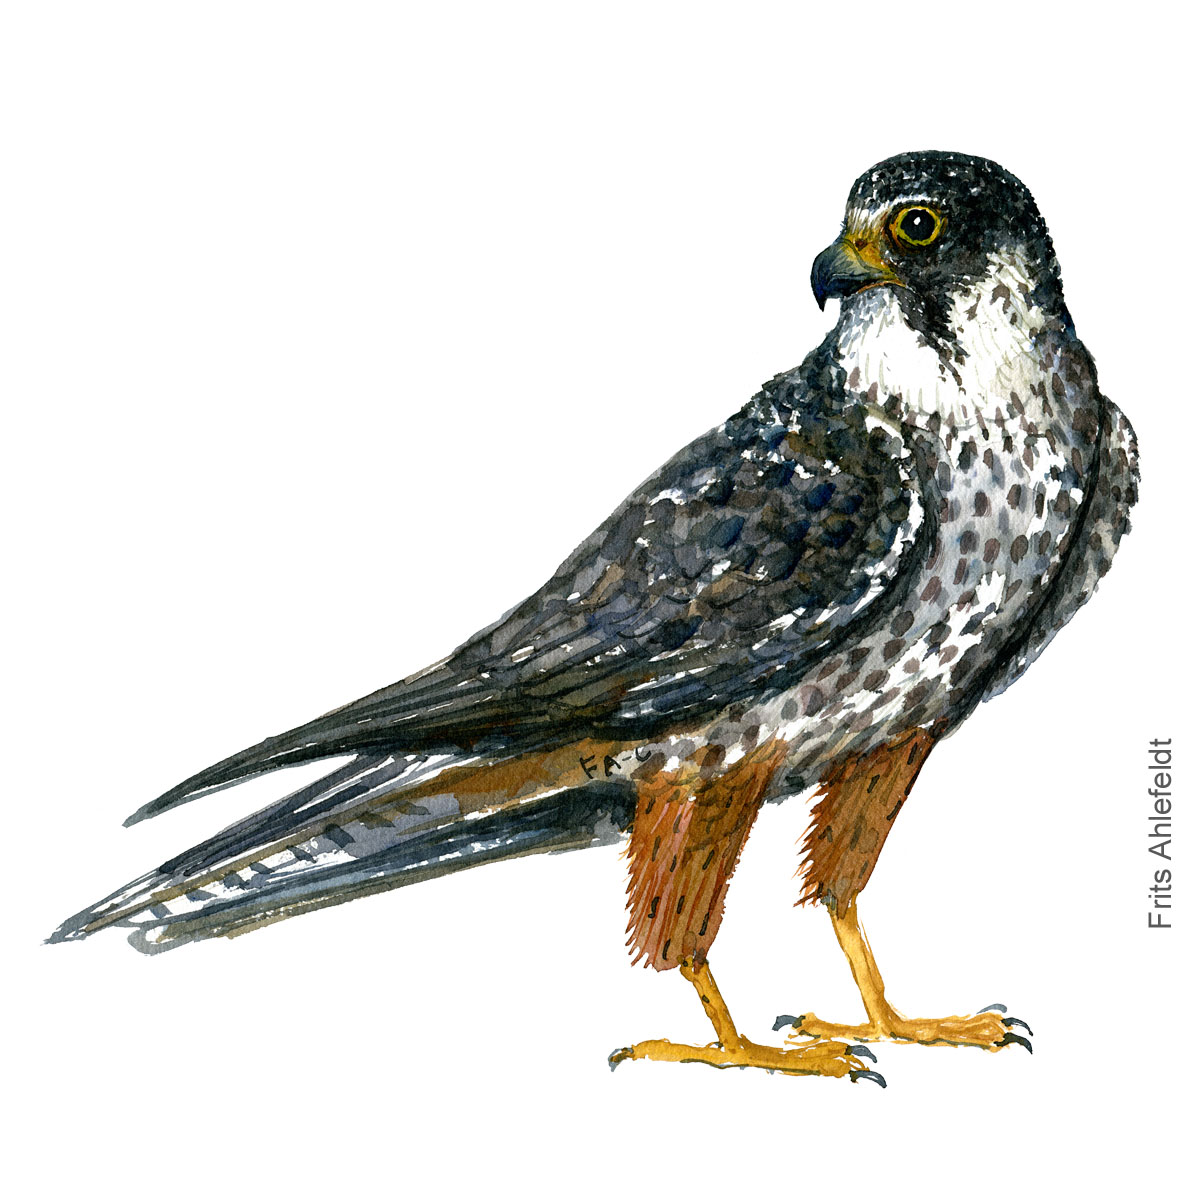 Laerkefalk - Hobby - Bird painting in watercolor by Frits Ahlefeldt - Fugle akvarel